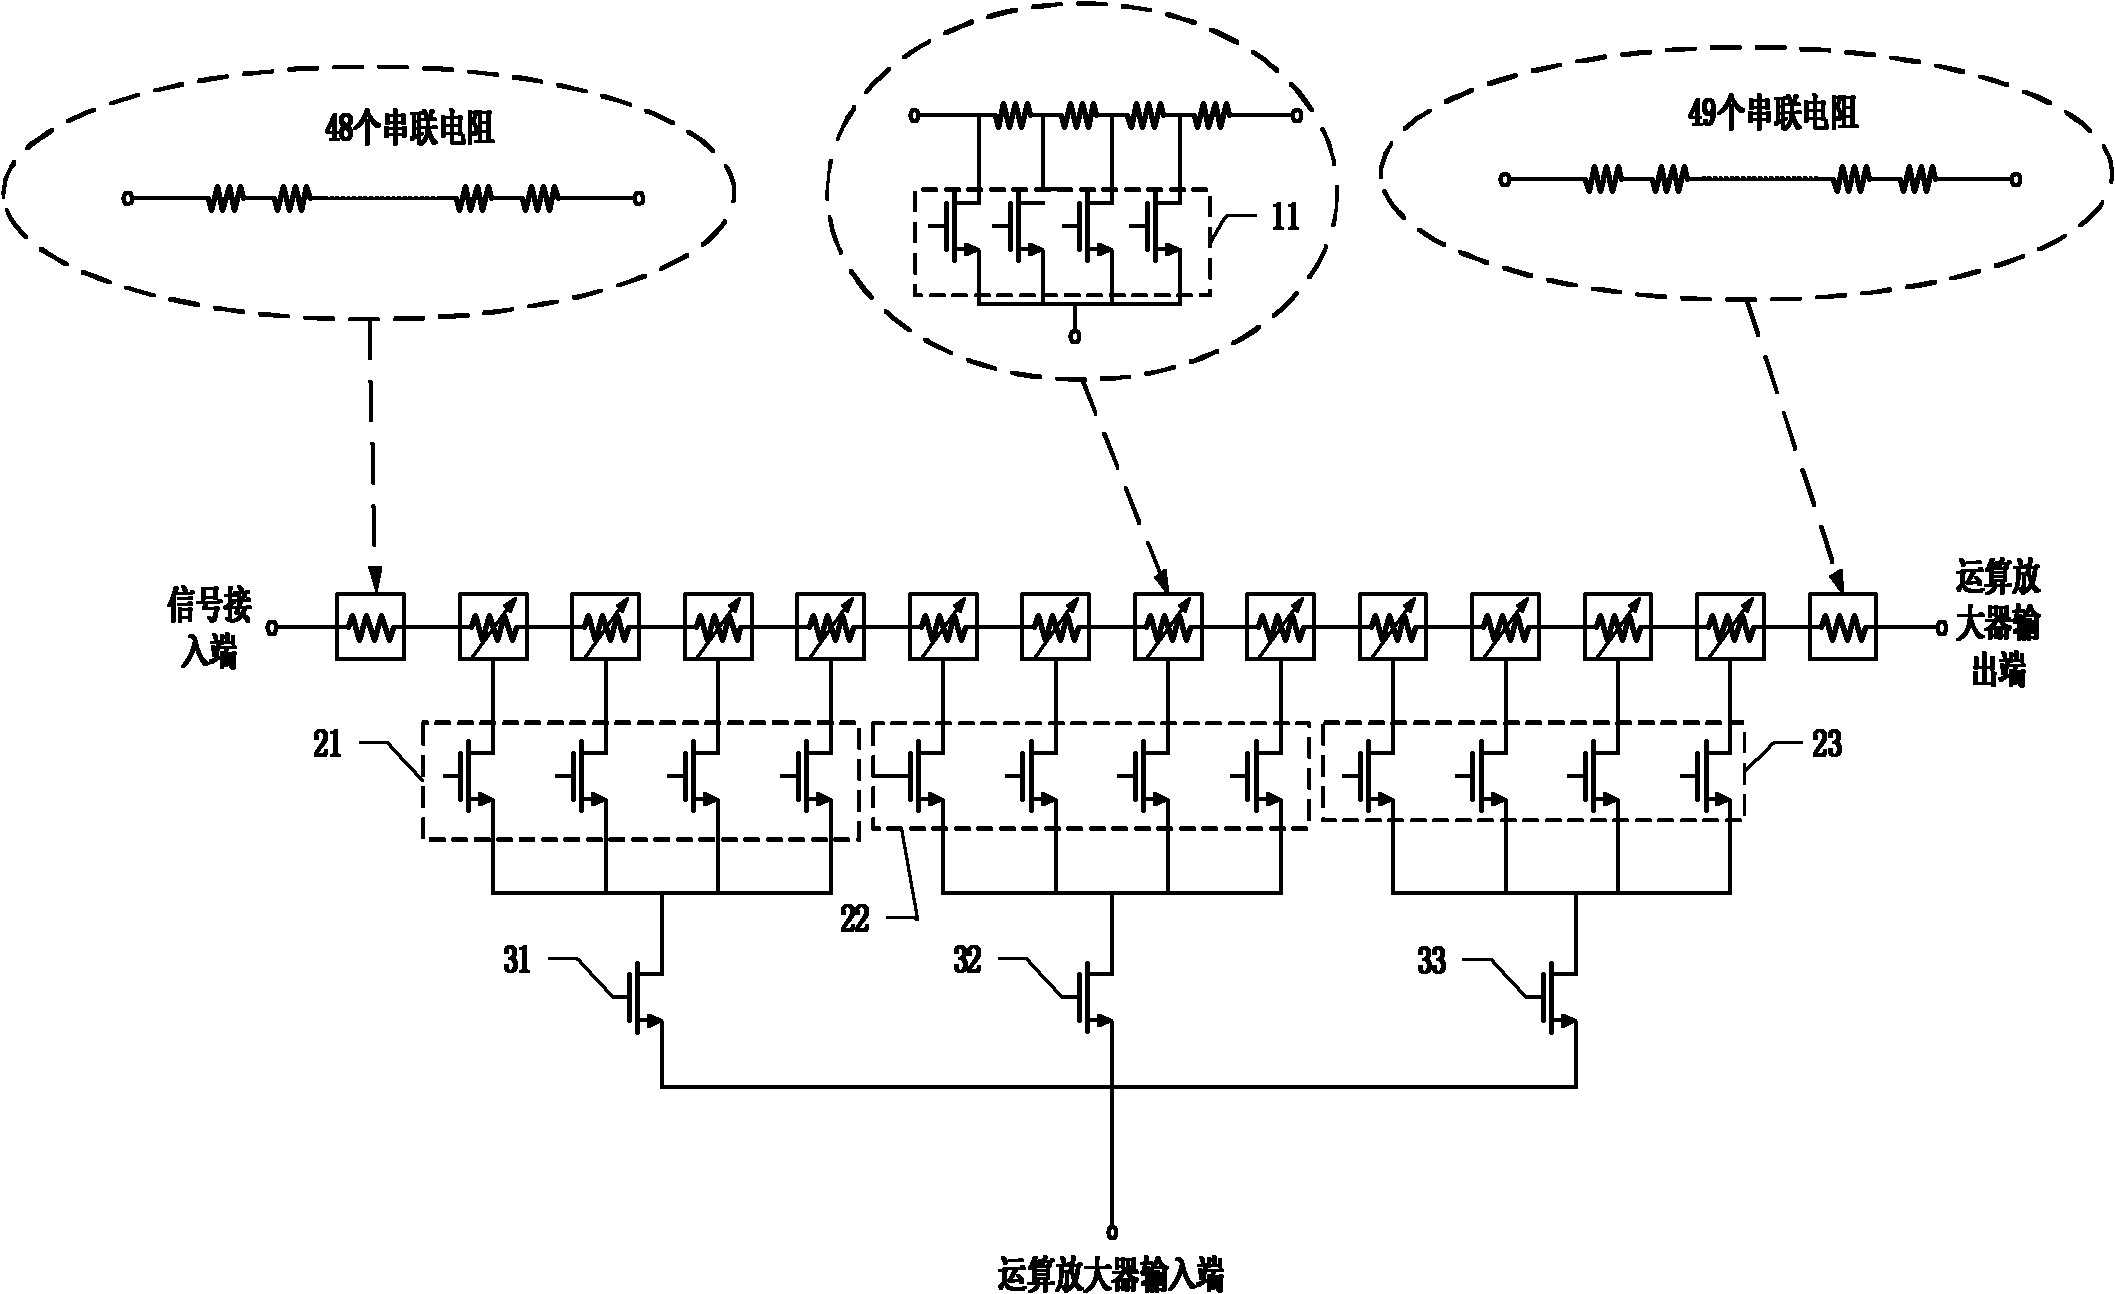 variable gain amplifier